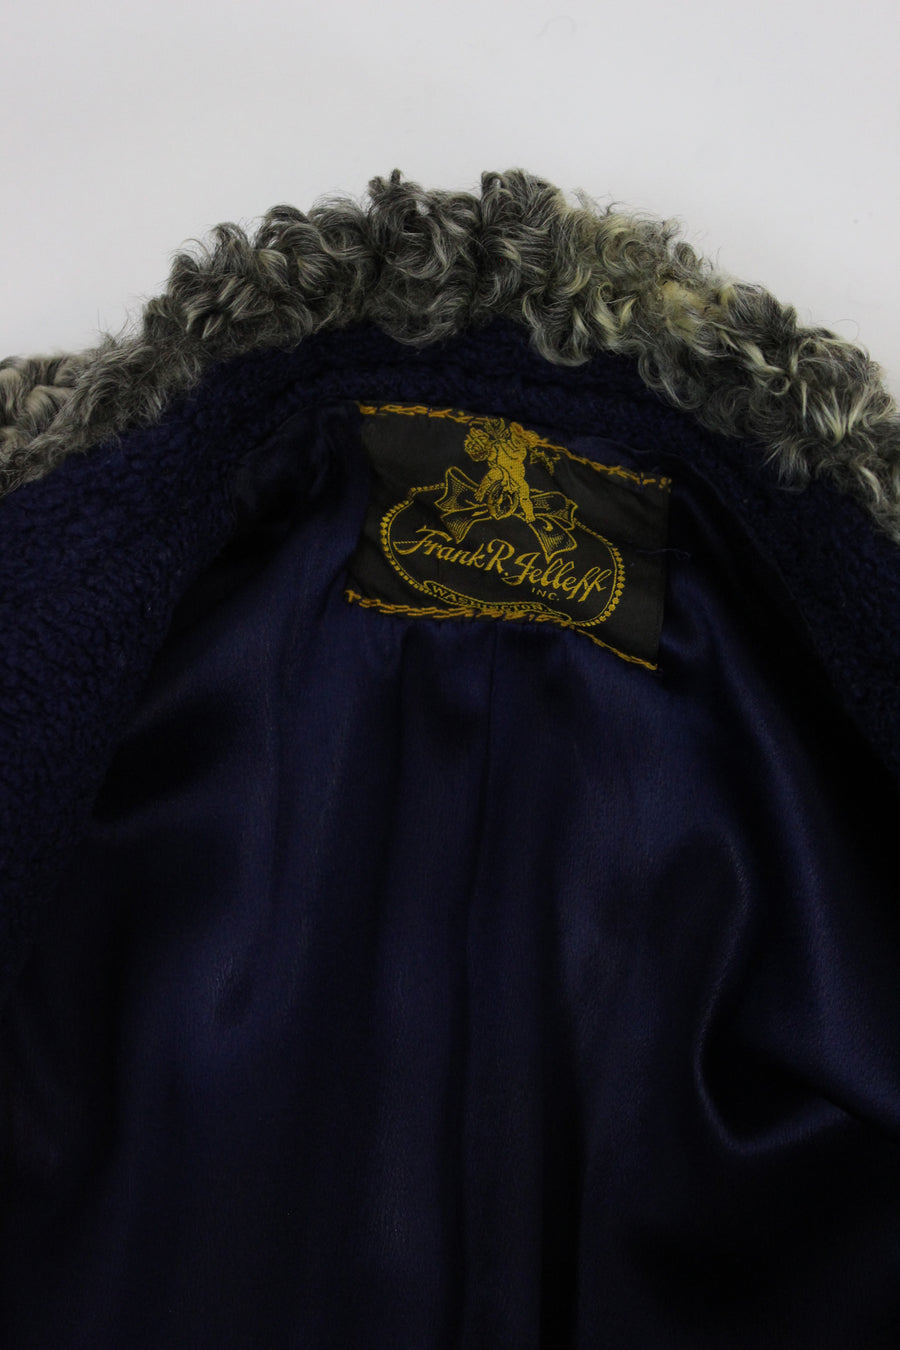 1940's navy boucle fur cape coat large | new fall